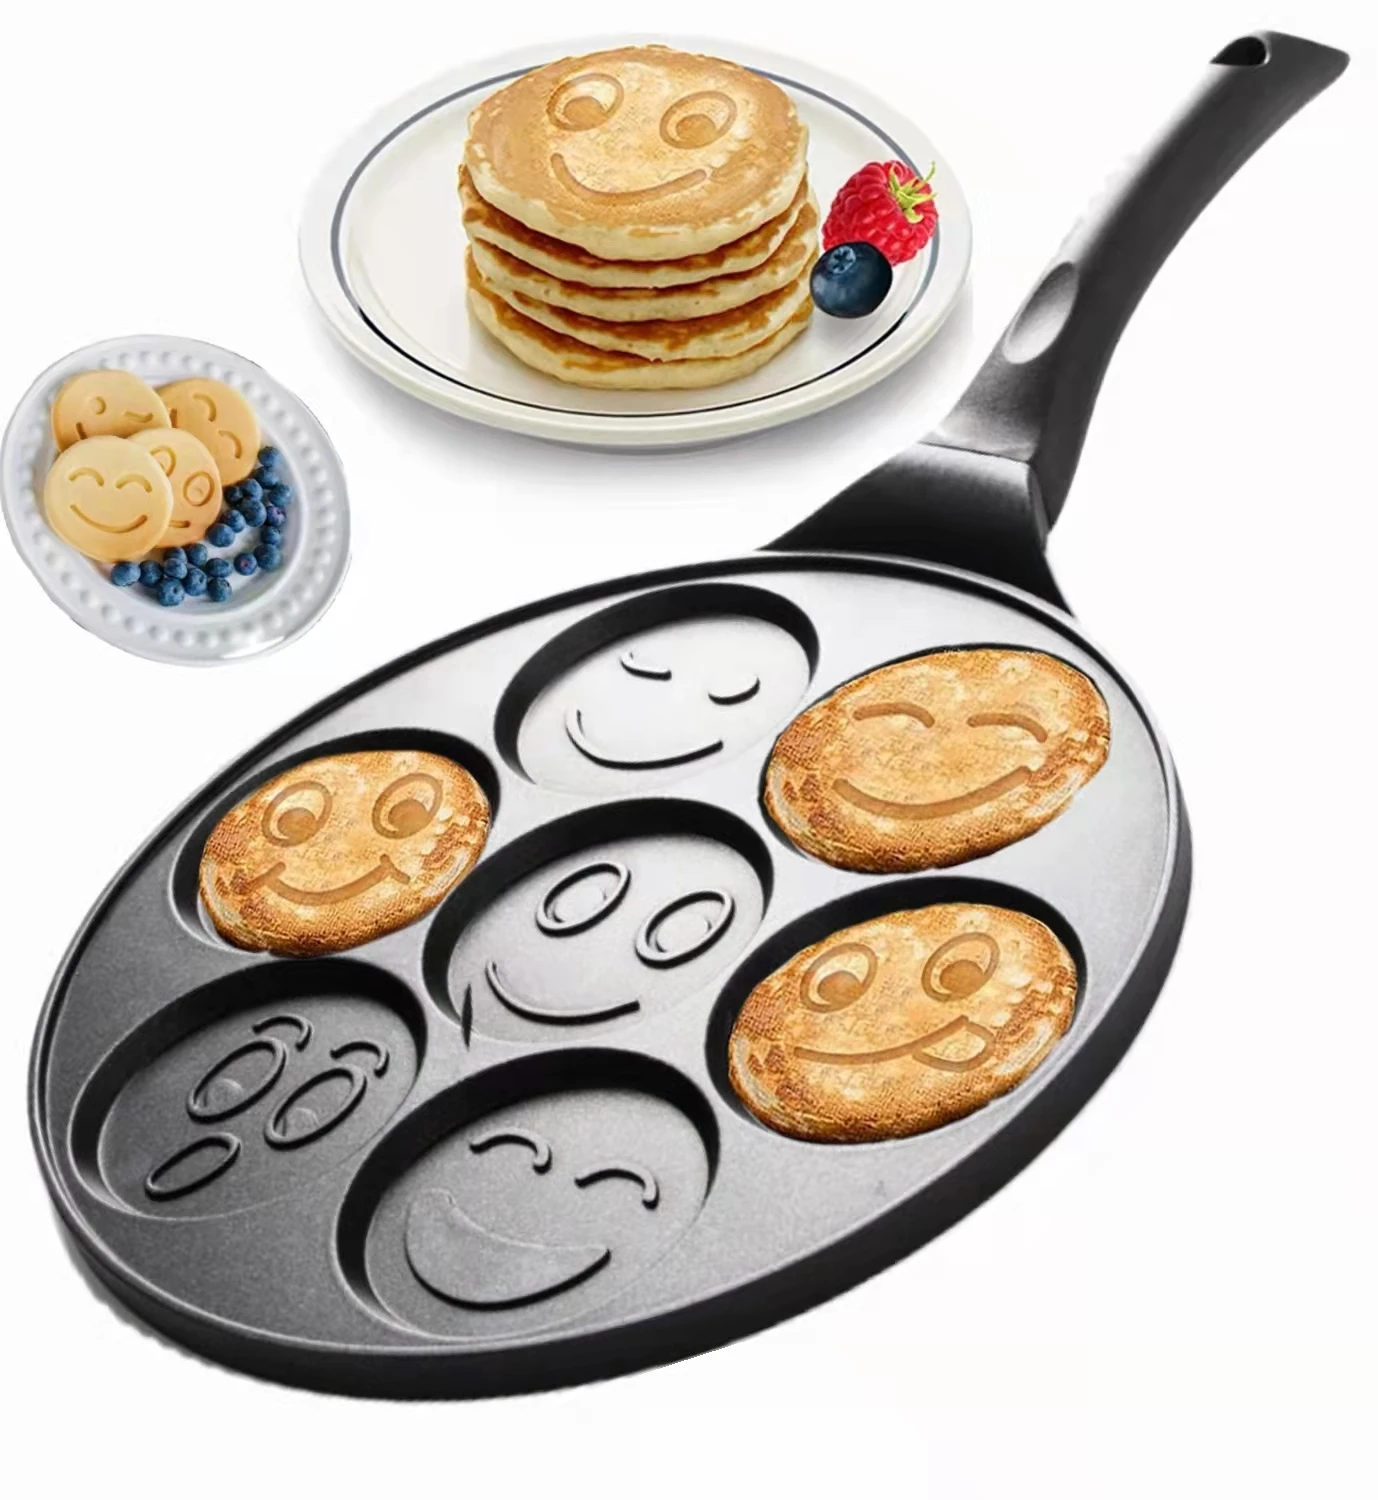 

2021 Smiley Face Pancake Pan 7 Hole Mini Pancake Flapjack Maker Die Cast Aluminum,Double Layer Nonstick Fry Pan, Natural color